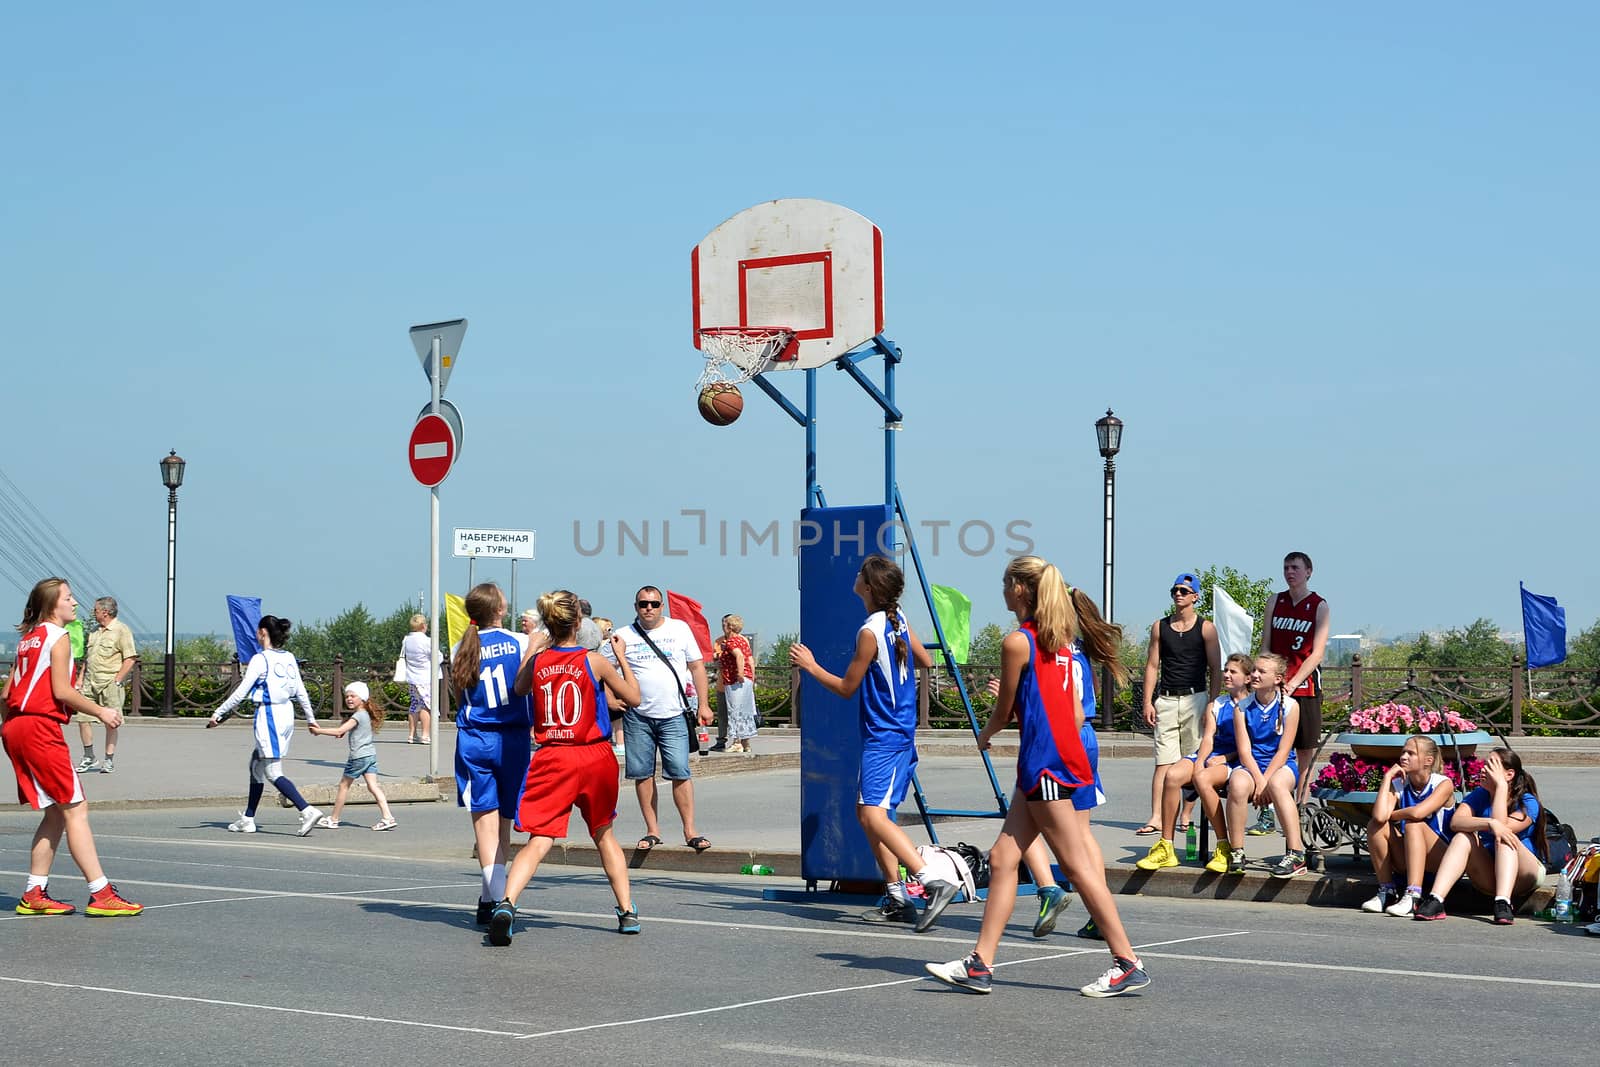 Street basketball among women's teams on the street in Tyumen, R by veronka72